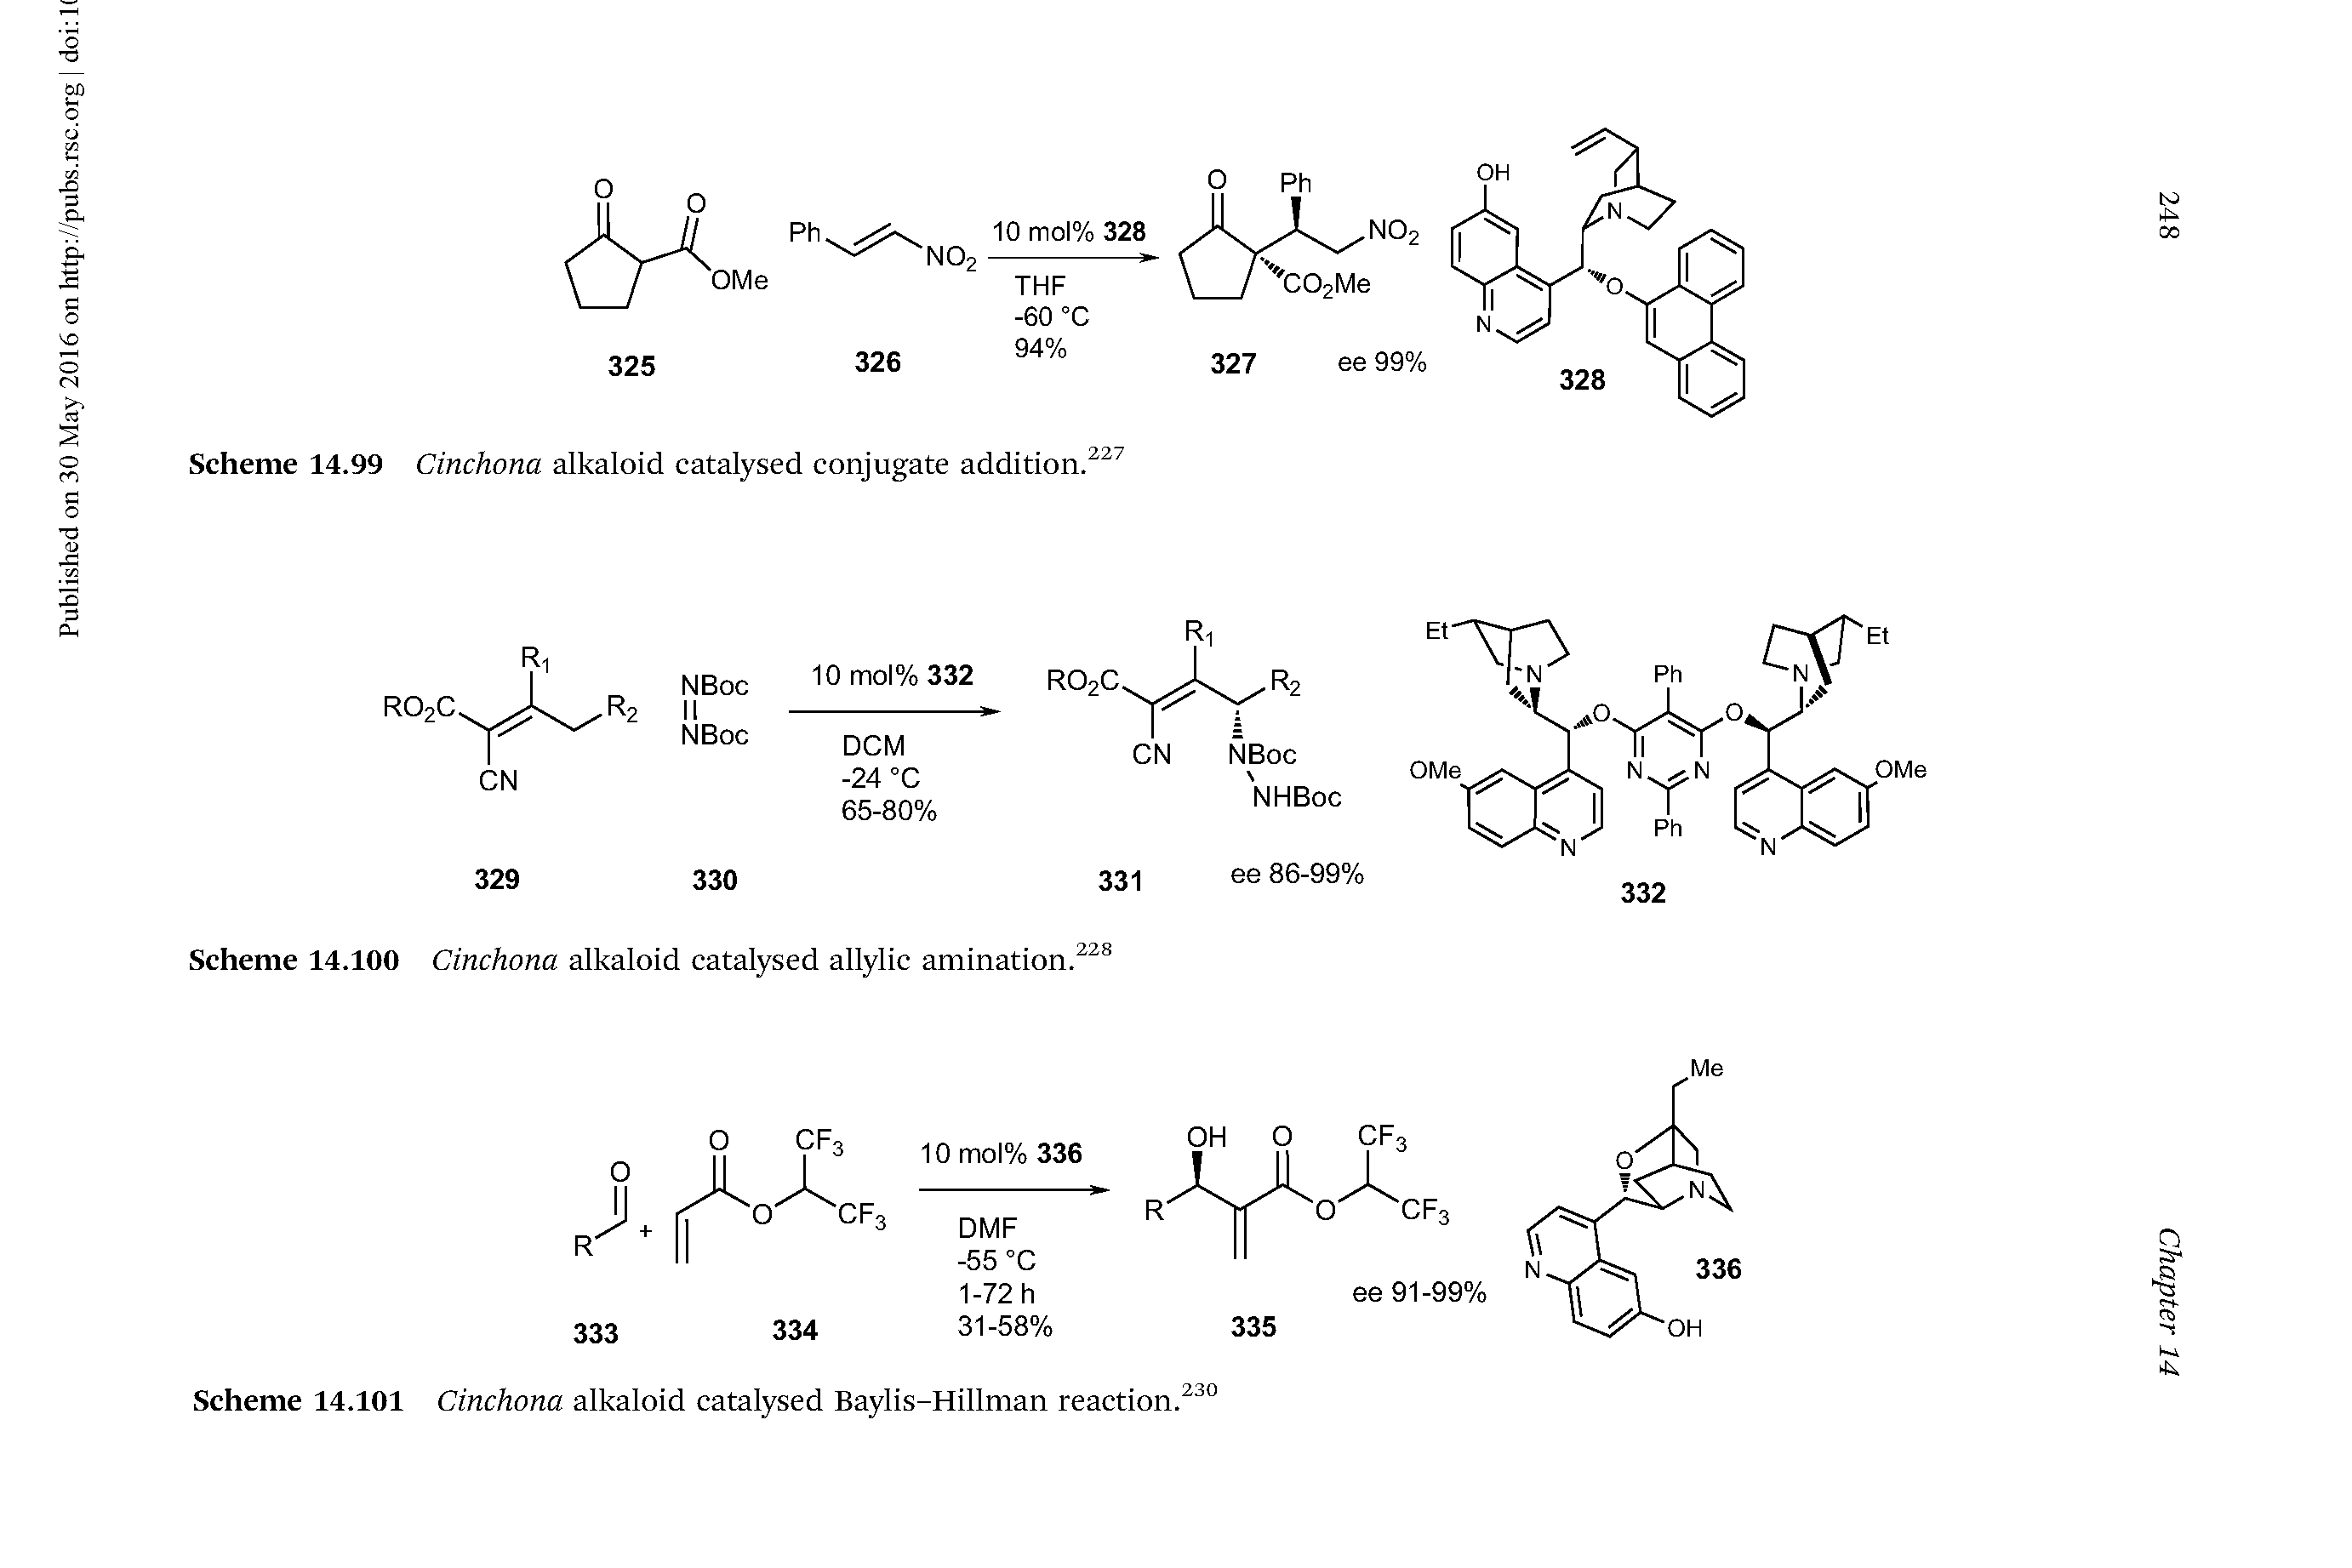 Scheme 14.100 Cinchona alkaloid catalysed allylic amination. ...